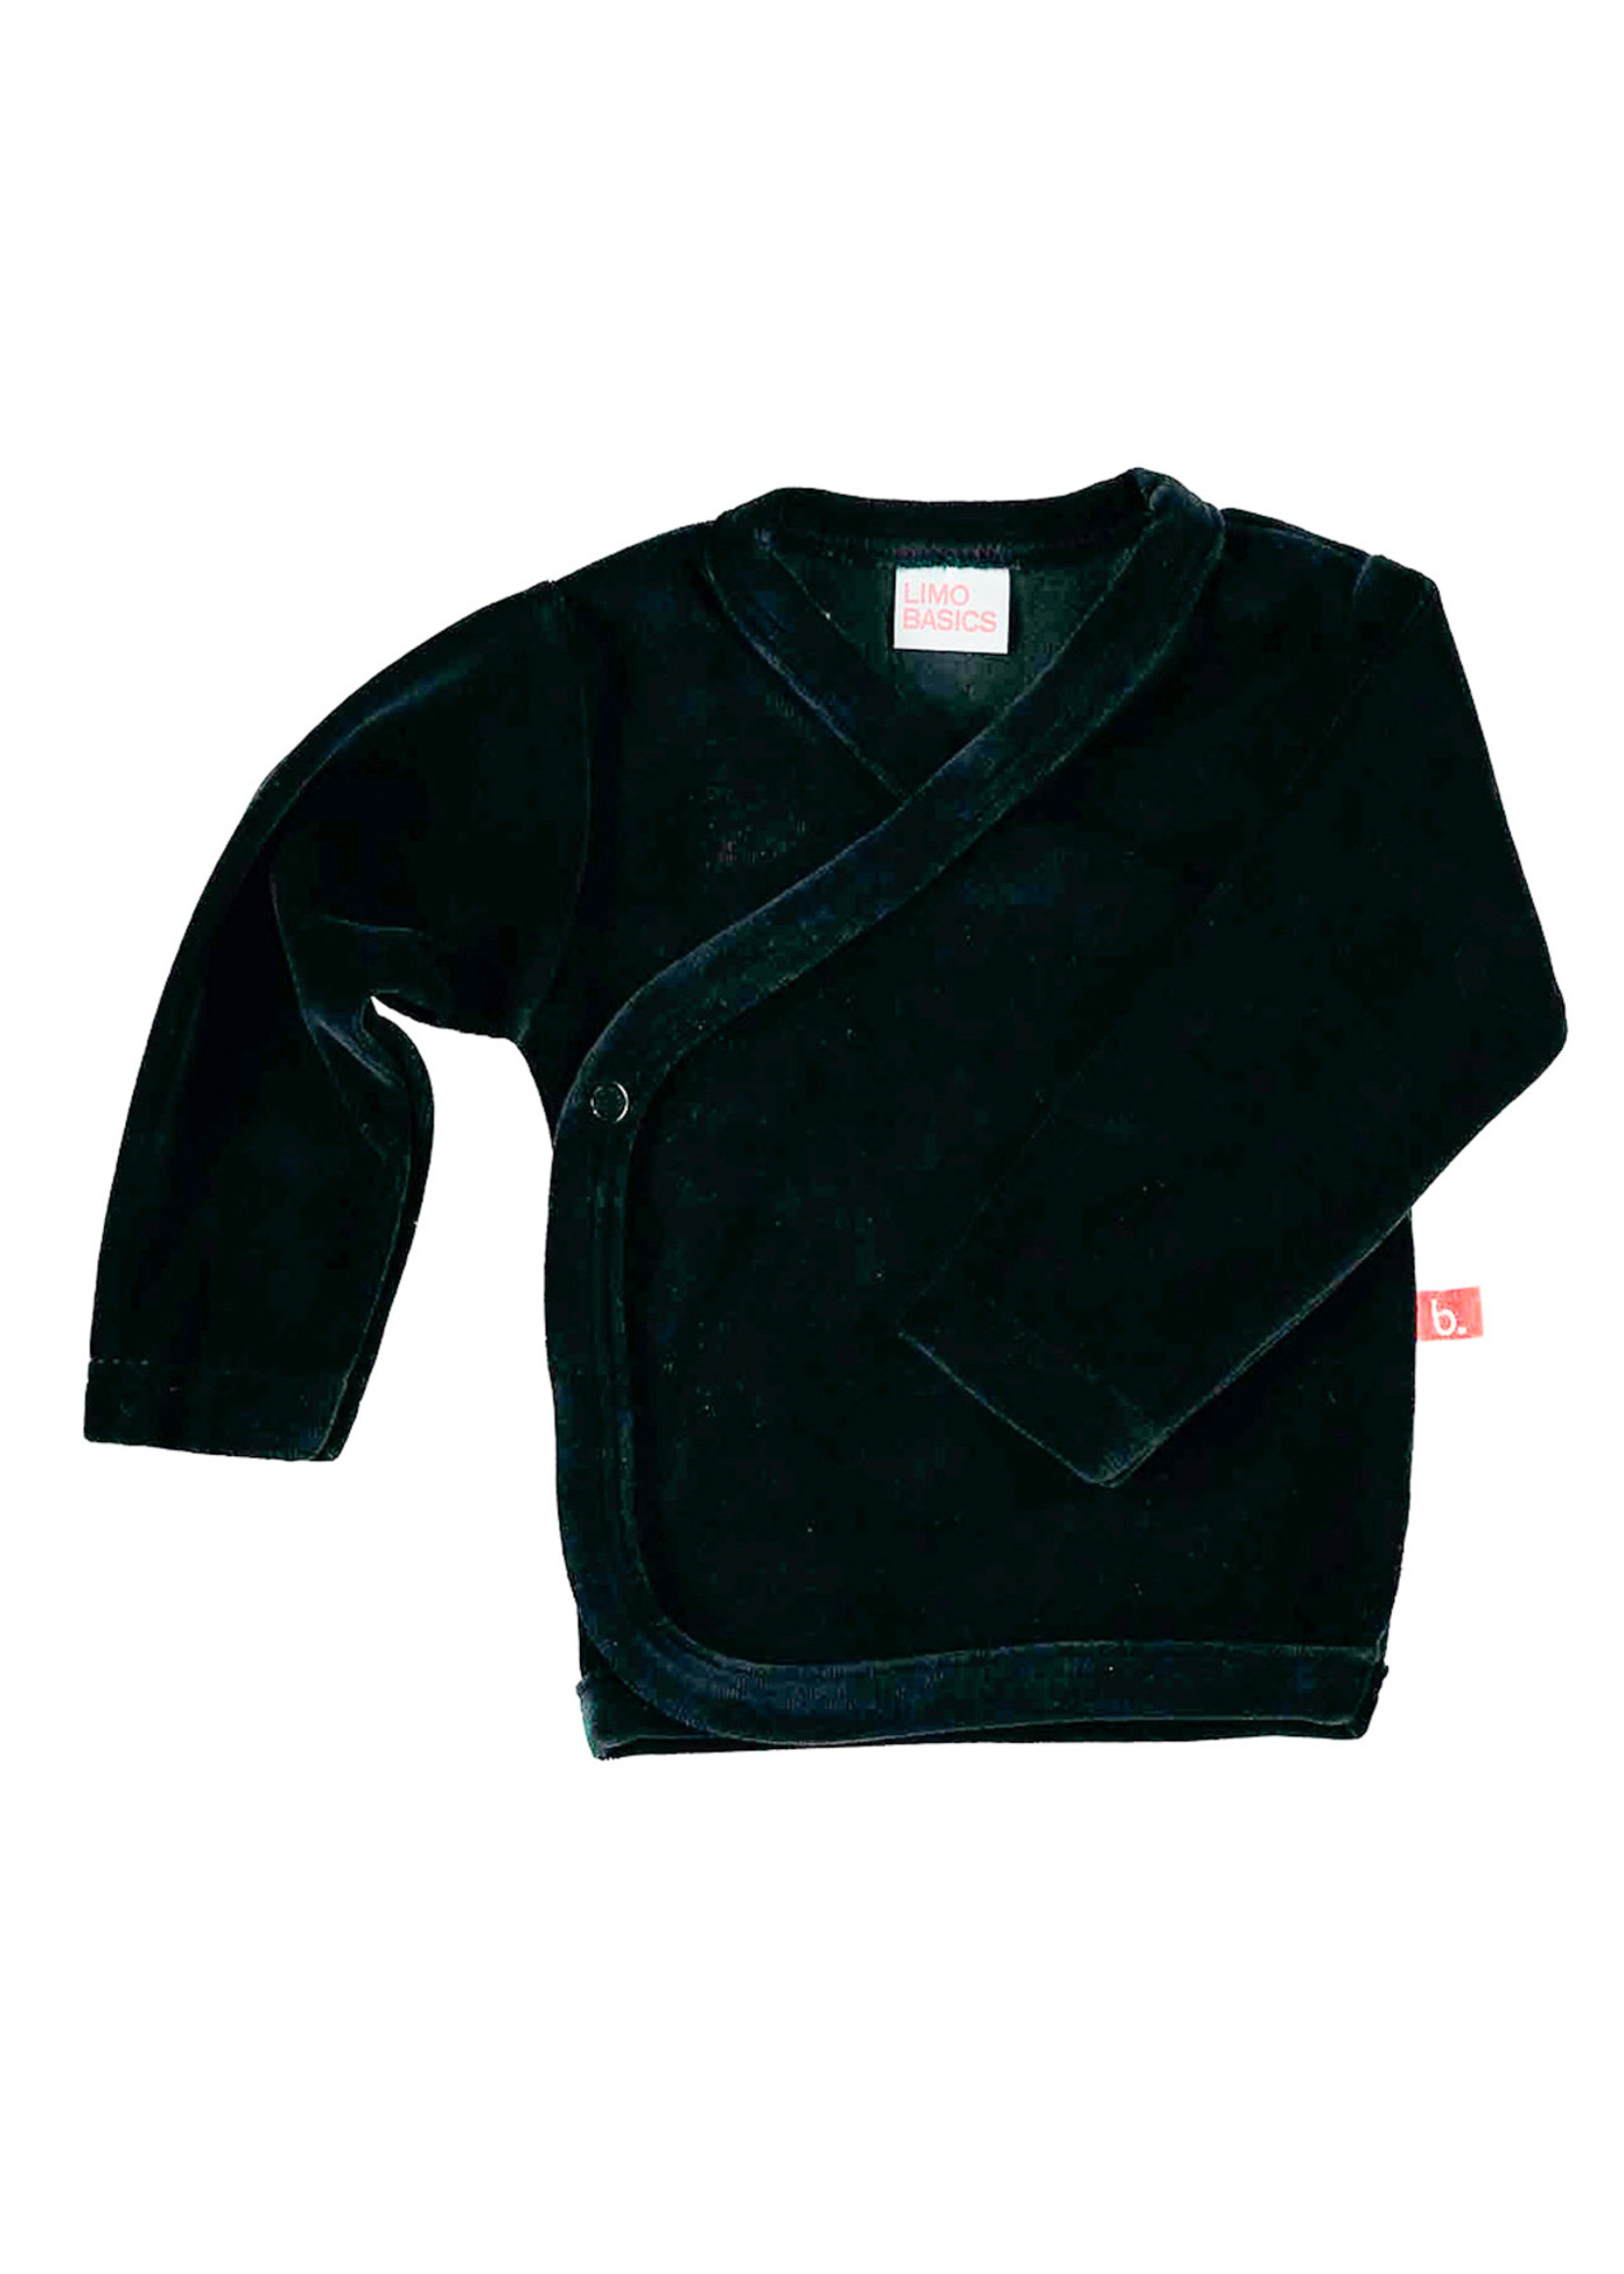 Limo basics Kimono shirt velour black 50